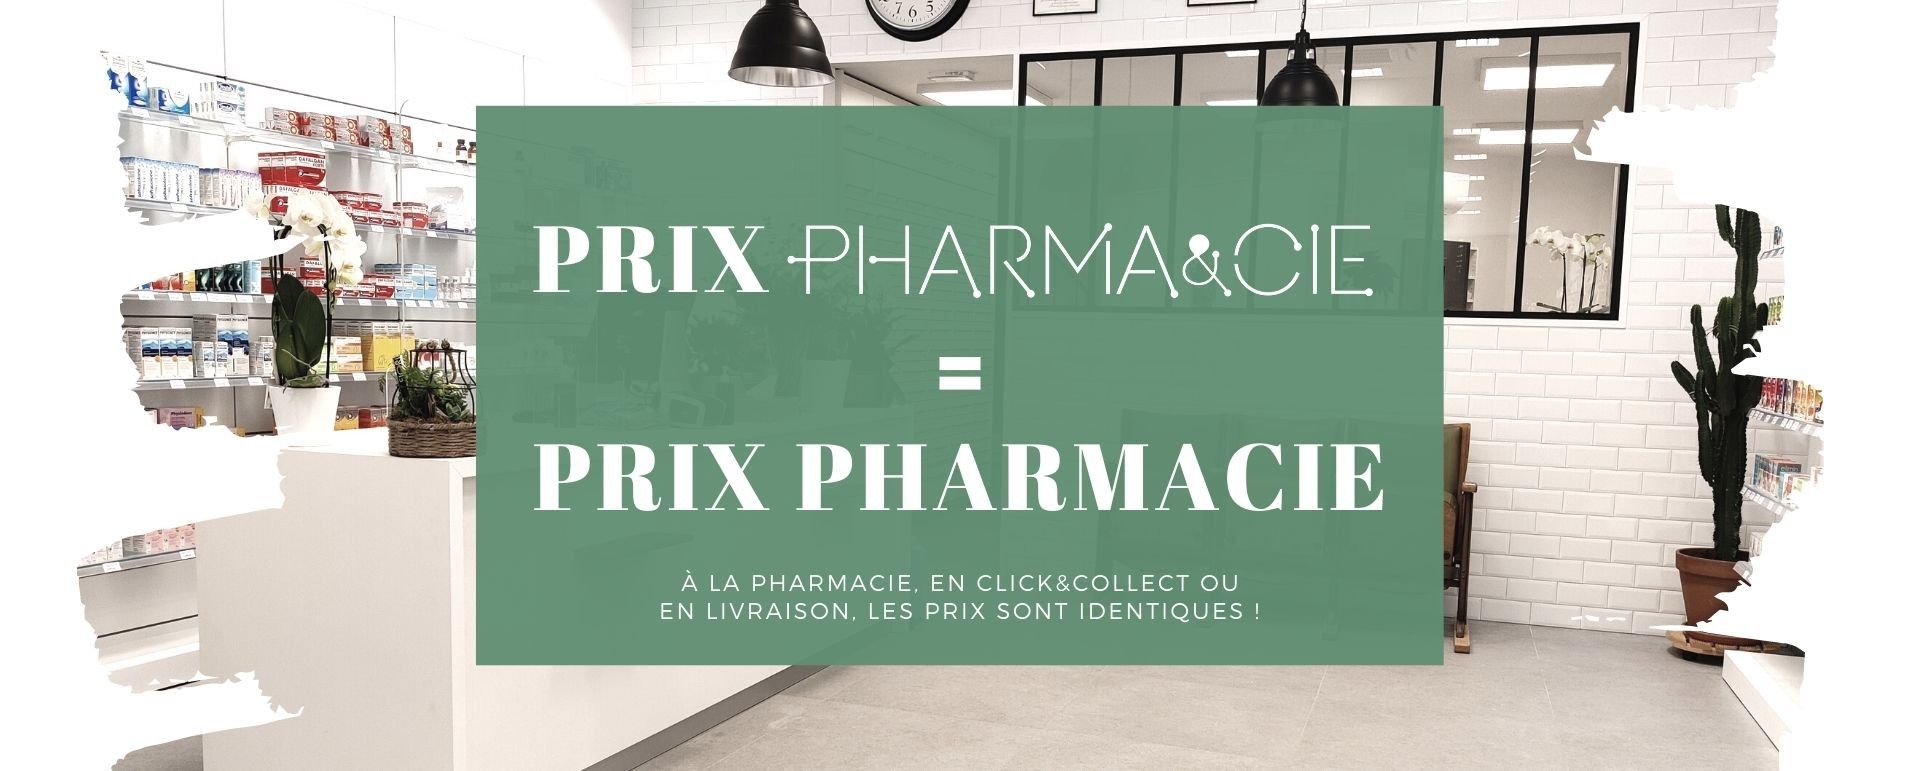 Prix pharma&cie = Prix pharmacie